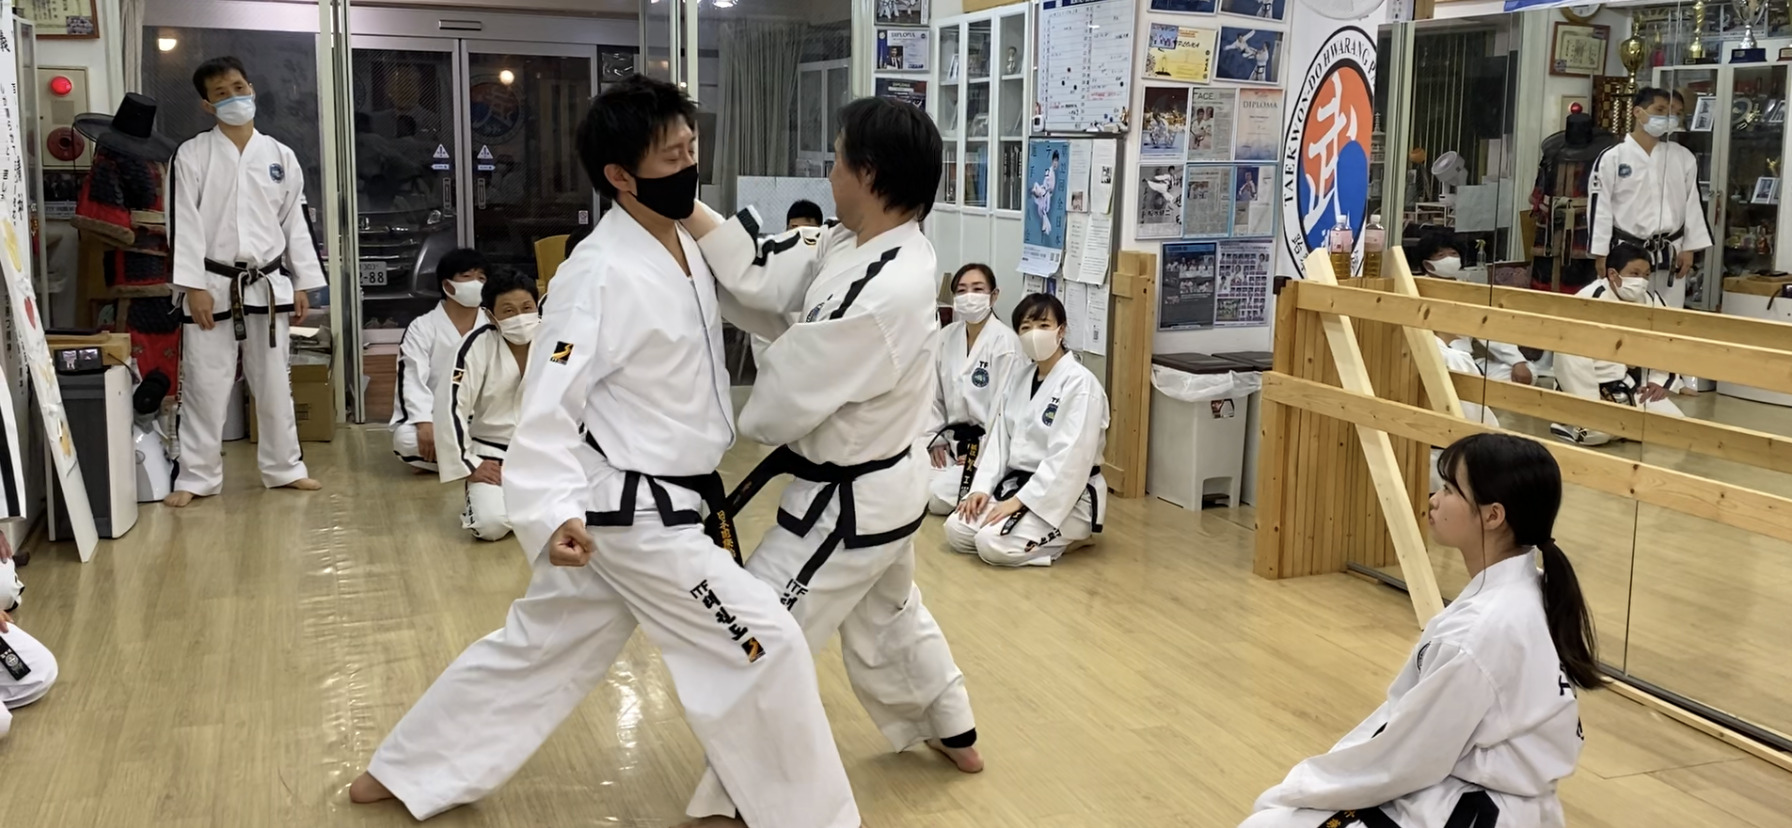 taekwondo-toda-20210213 (1)